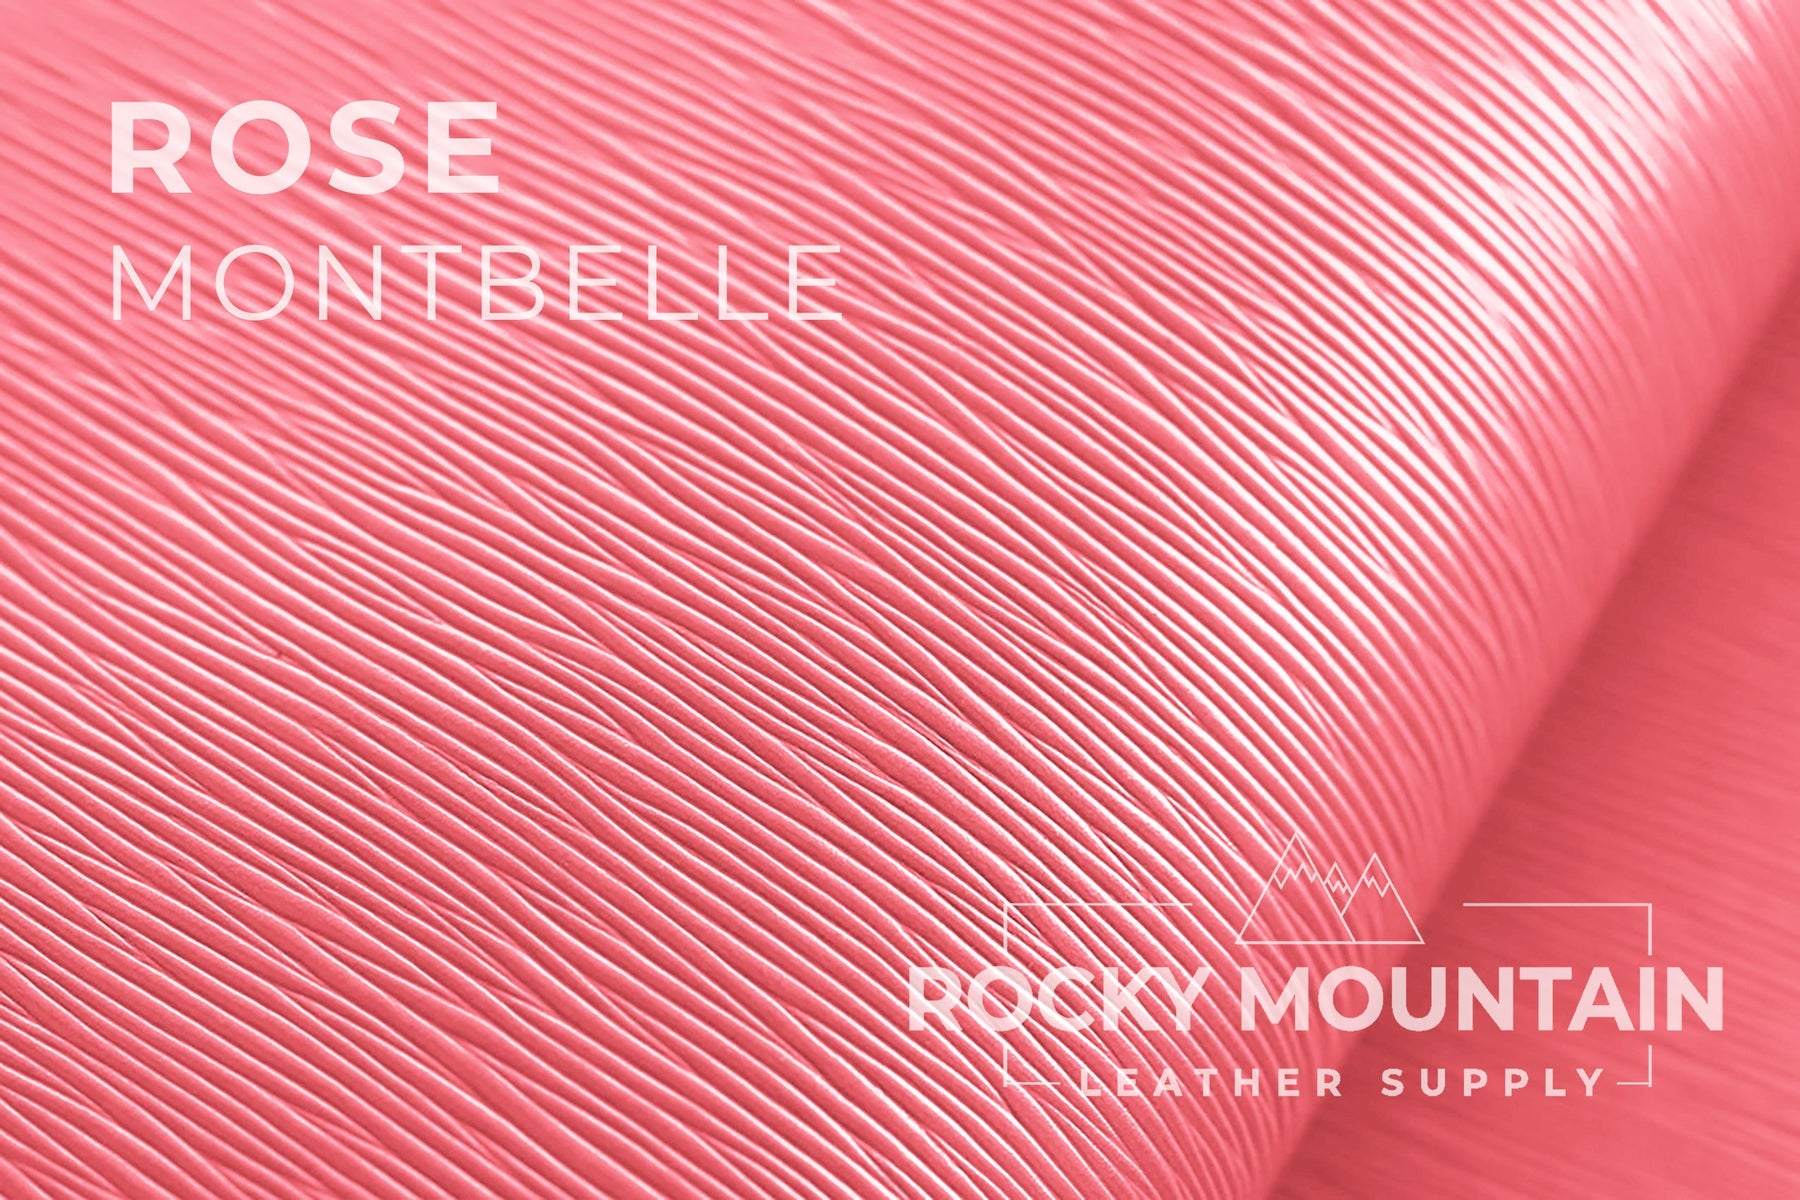 Montbelle (Epi) 🇪🇺 - Luxury Calfskin Leather (SAMPLES)